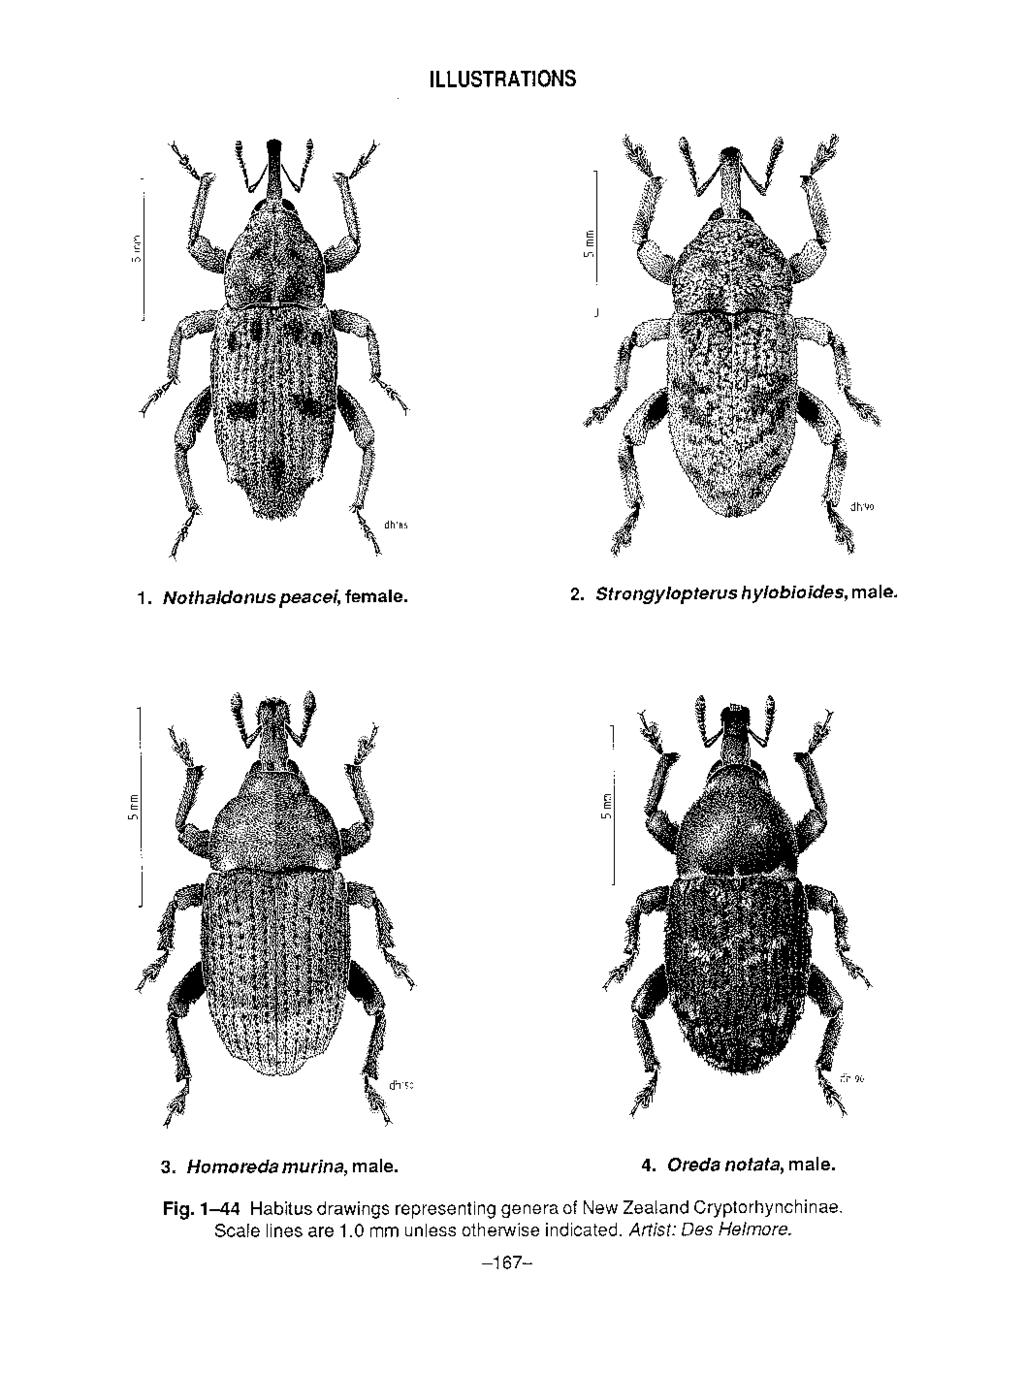 ILLUSTRATIONS Ε Ε ιo 1. Nothaldonus peacei, female. 2. Strongylopterus hylobioides, male. 3. Homoreda murina, male. 4. Oreda notata, male. Fig.